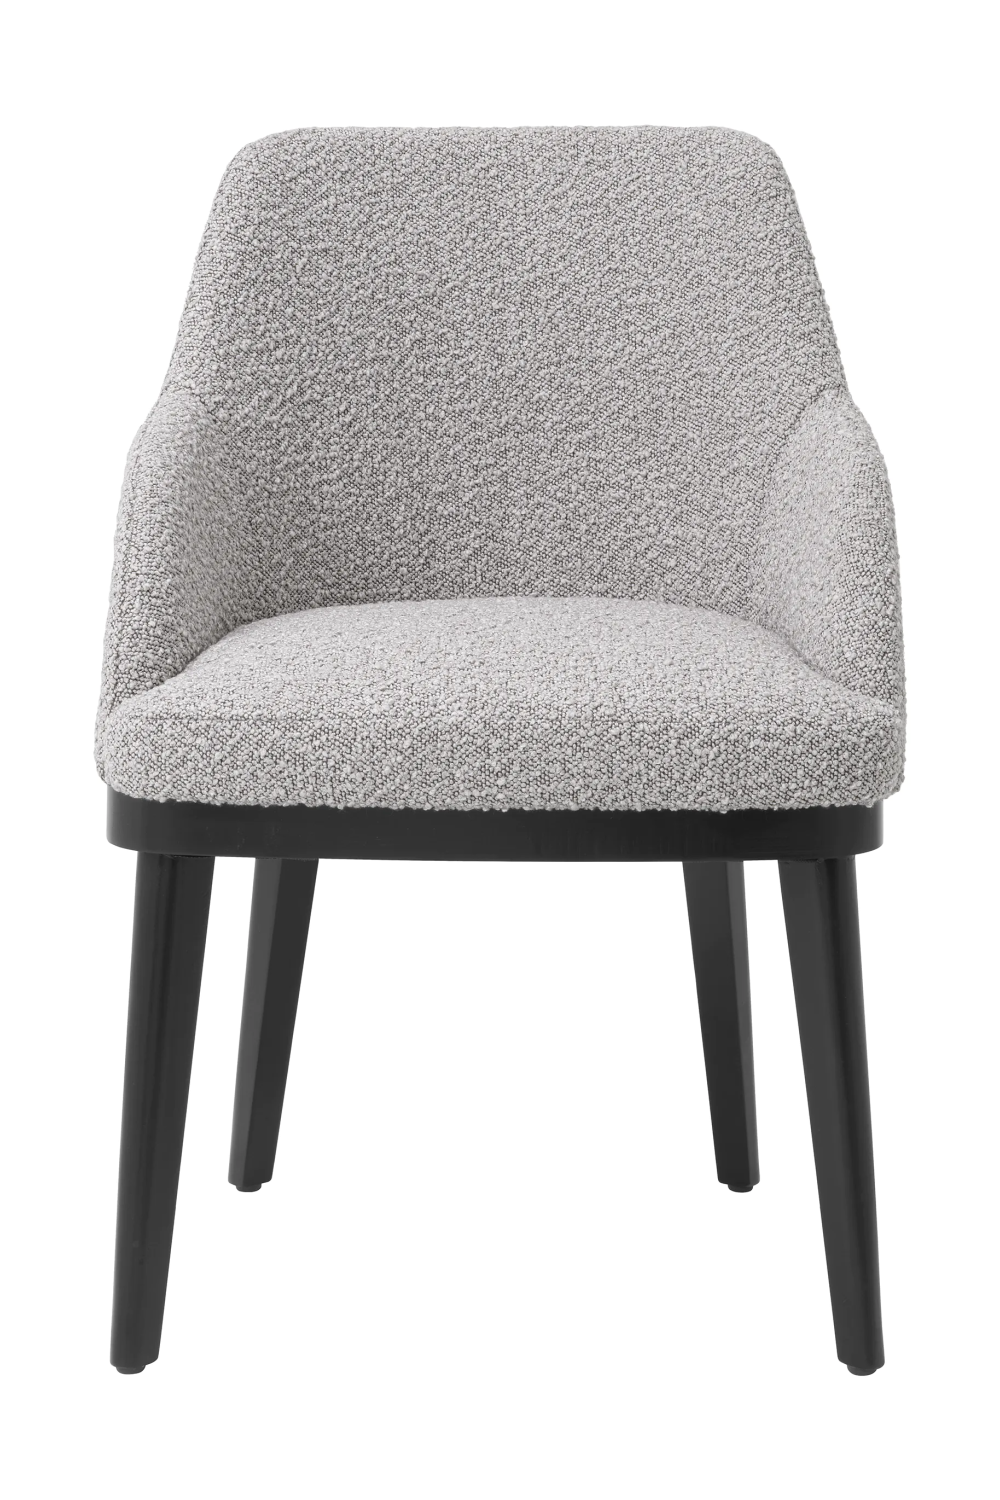 Minimalist High-Back Dining Chair | Eichholtz Costa | Oroa.com